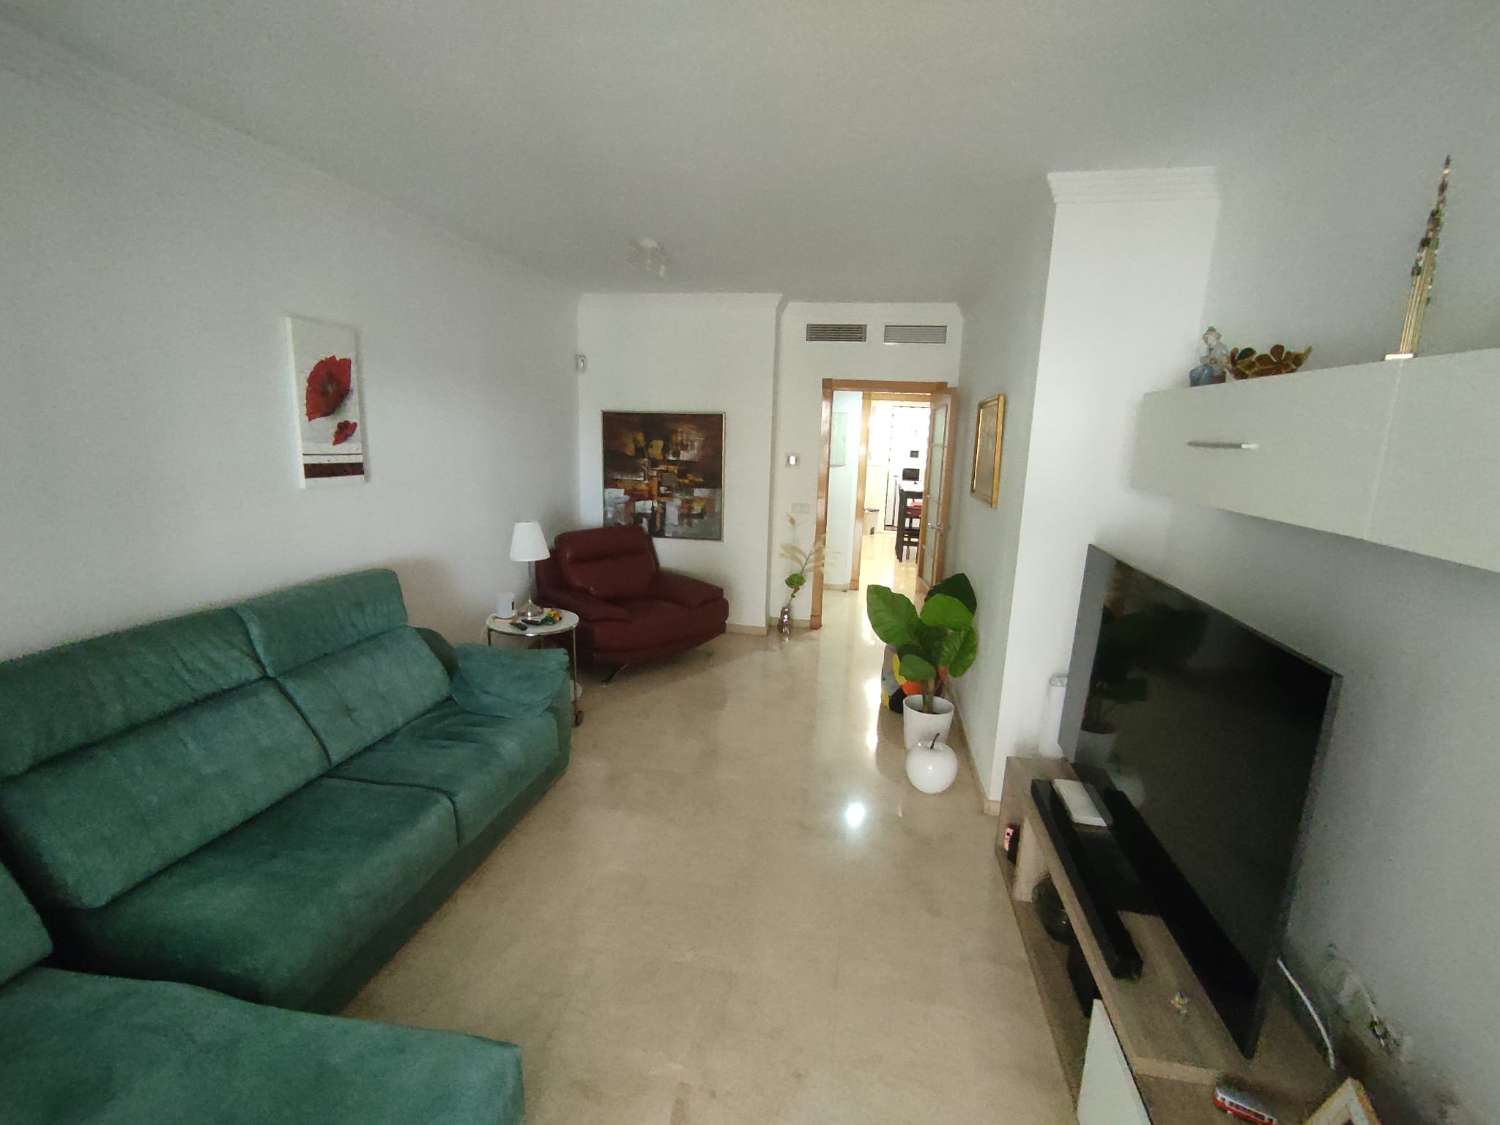 Flat for sale in Arroyo de la Miel (Benalmádena)